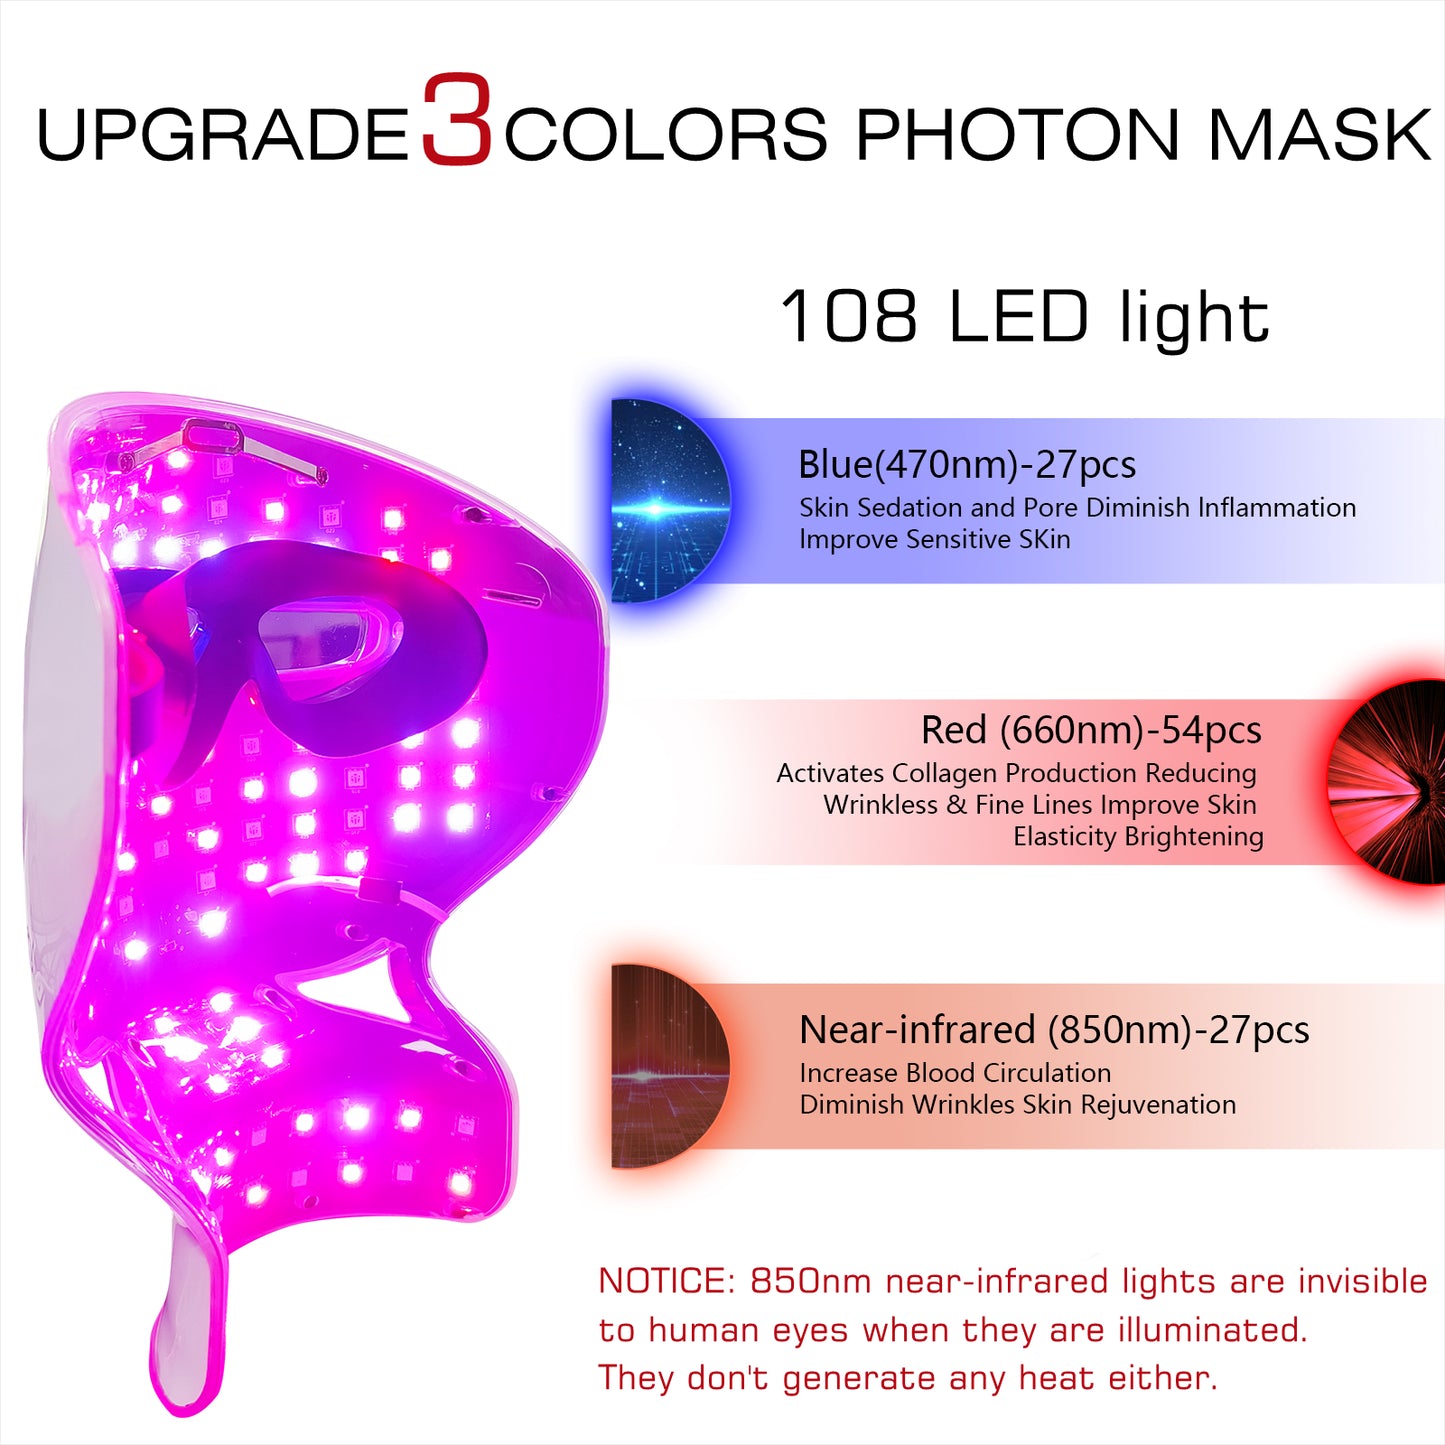 3 colors photon mask